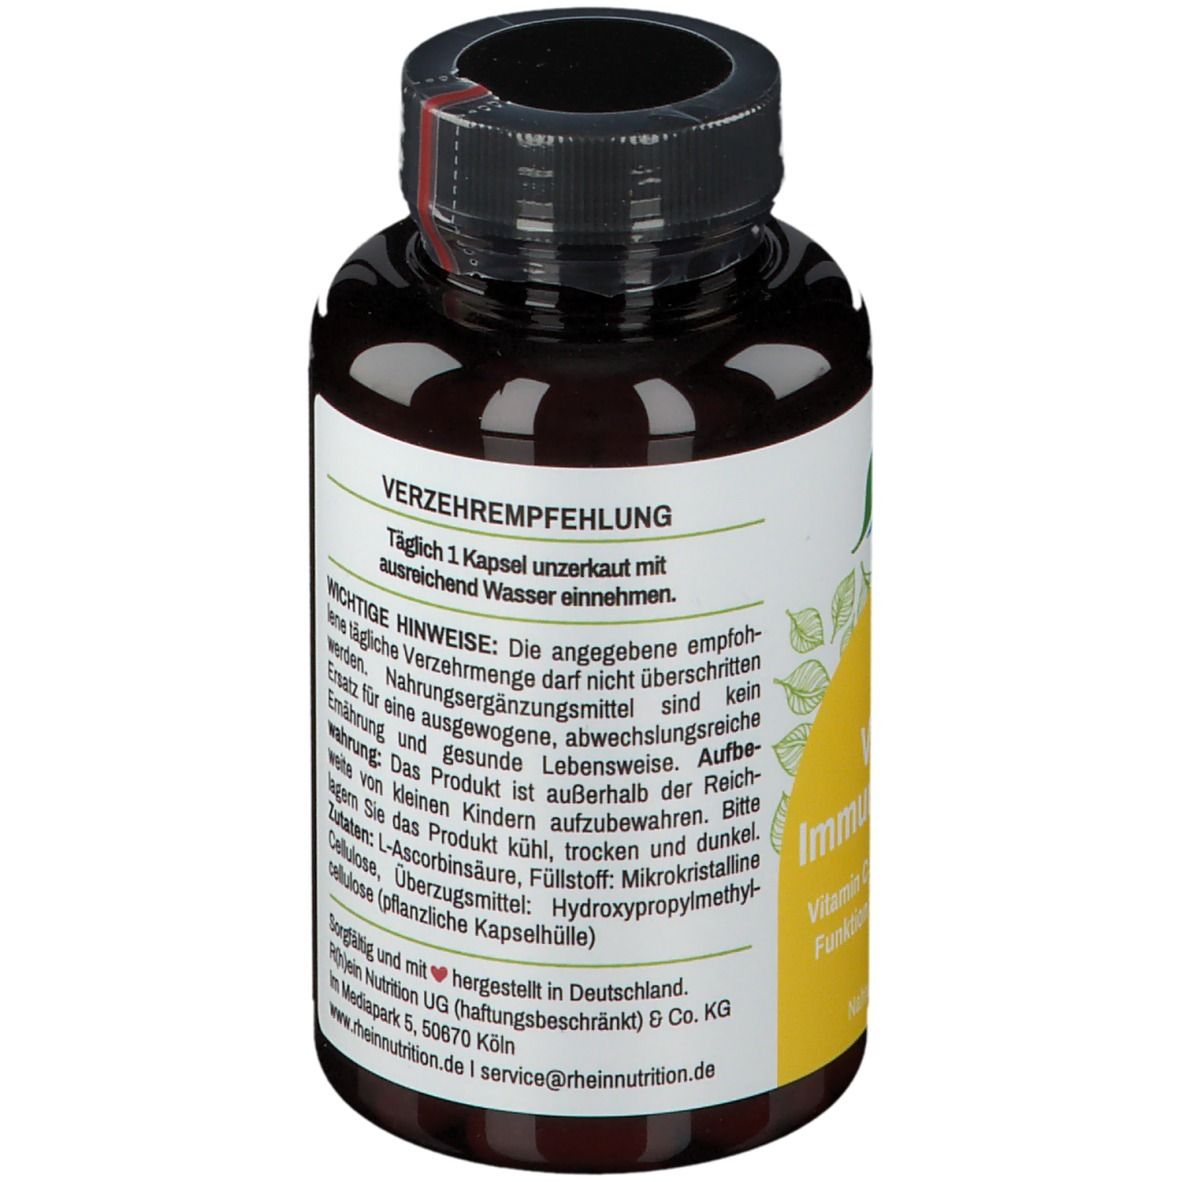 RheinNutrition® Vitamin C Immunsystem Plus Kapseln